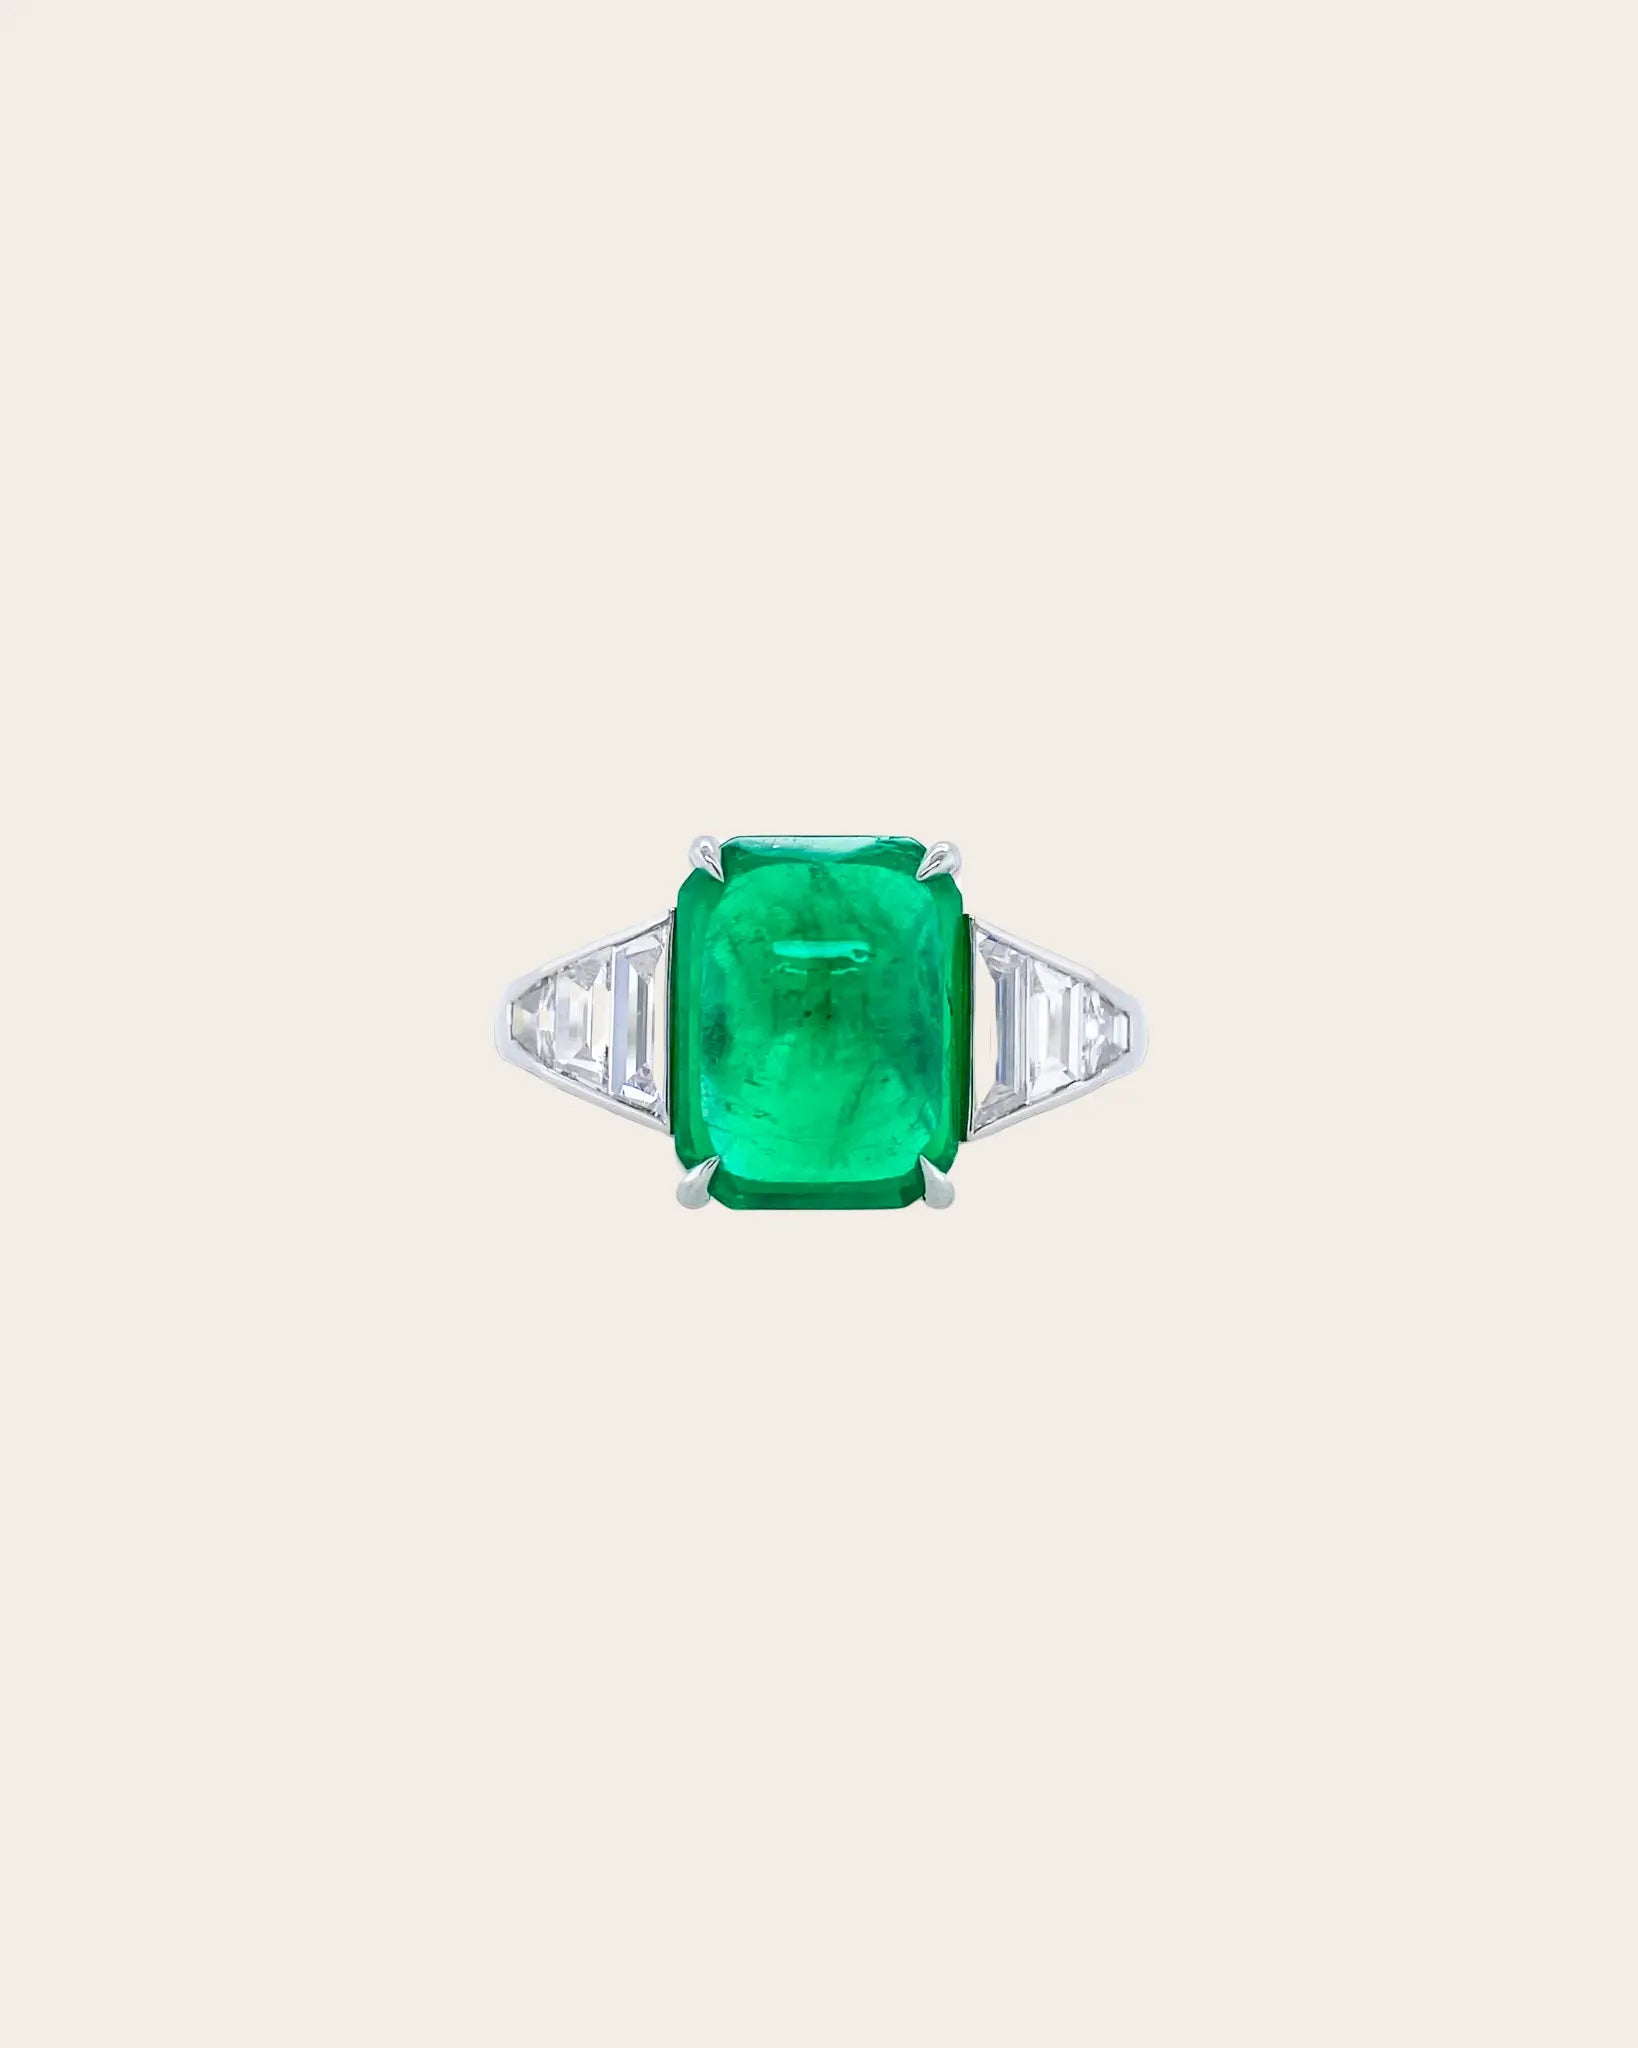 A Bayco one of a kind Columbian emerald & diamond ring.